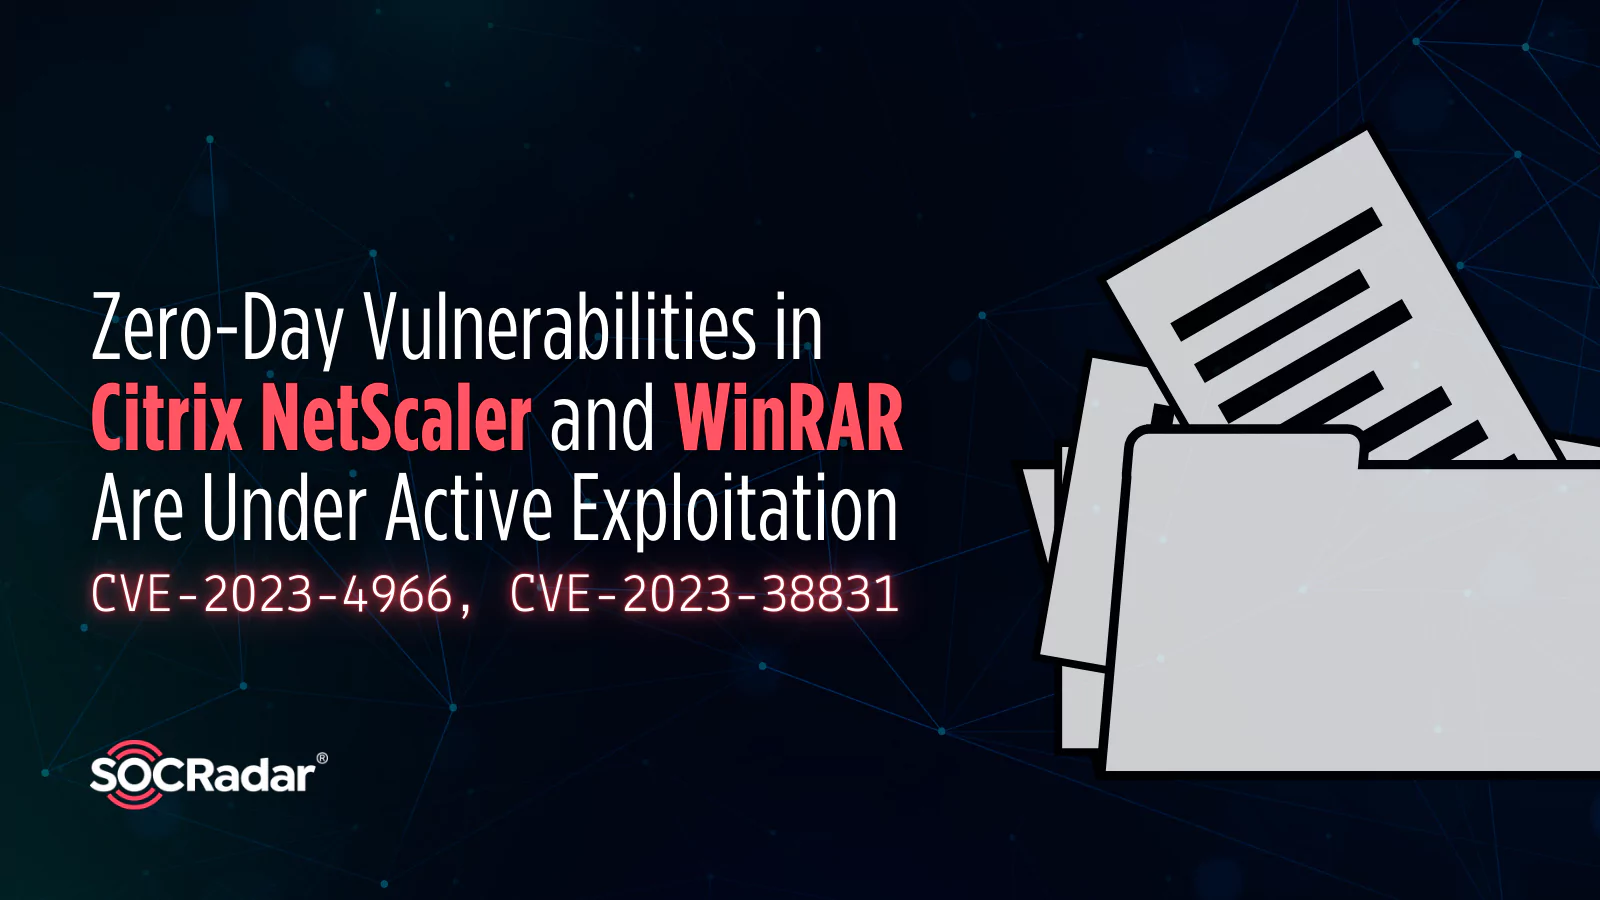 SOCRadar® Cyber Intelligence Inc. | Zero-Day Vulnerabilities in Citrix NetScaler and WinRAR Are Under Active Exploitation (CVE-2023-4966, CVE-2023-38831)